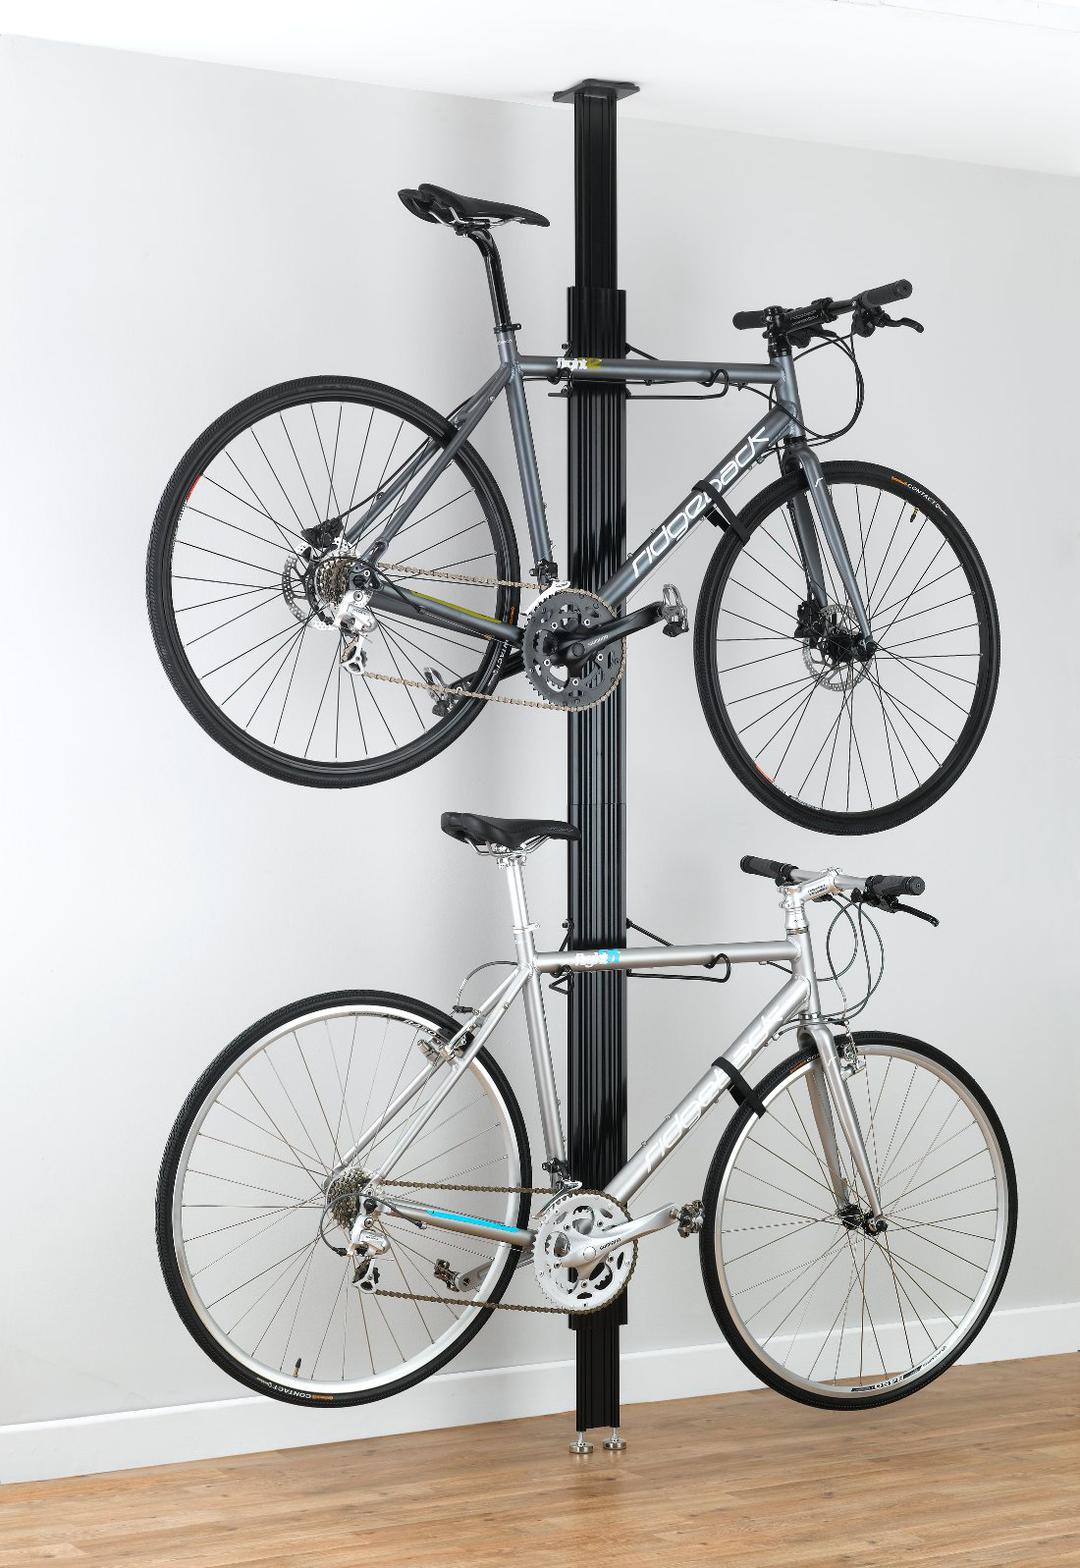 Bike storage racks, bike lifts, family bicycle racks